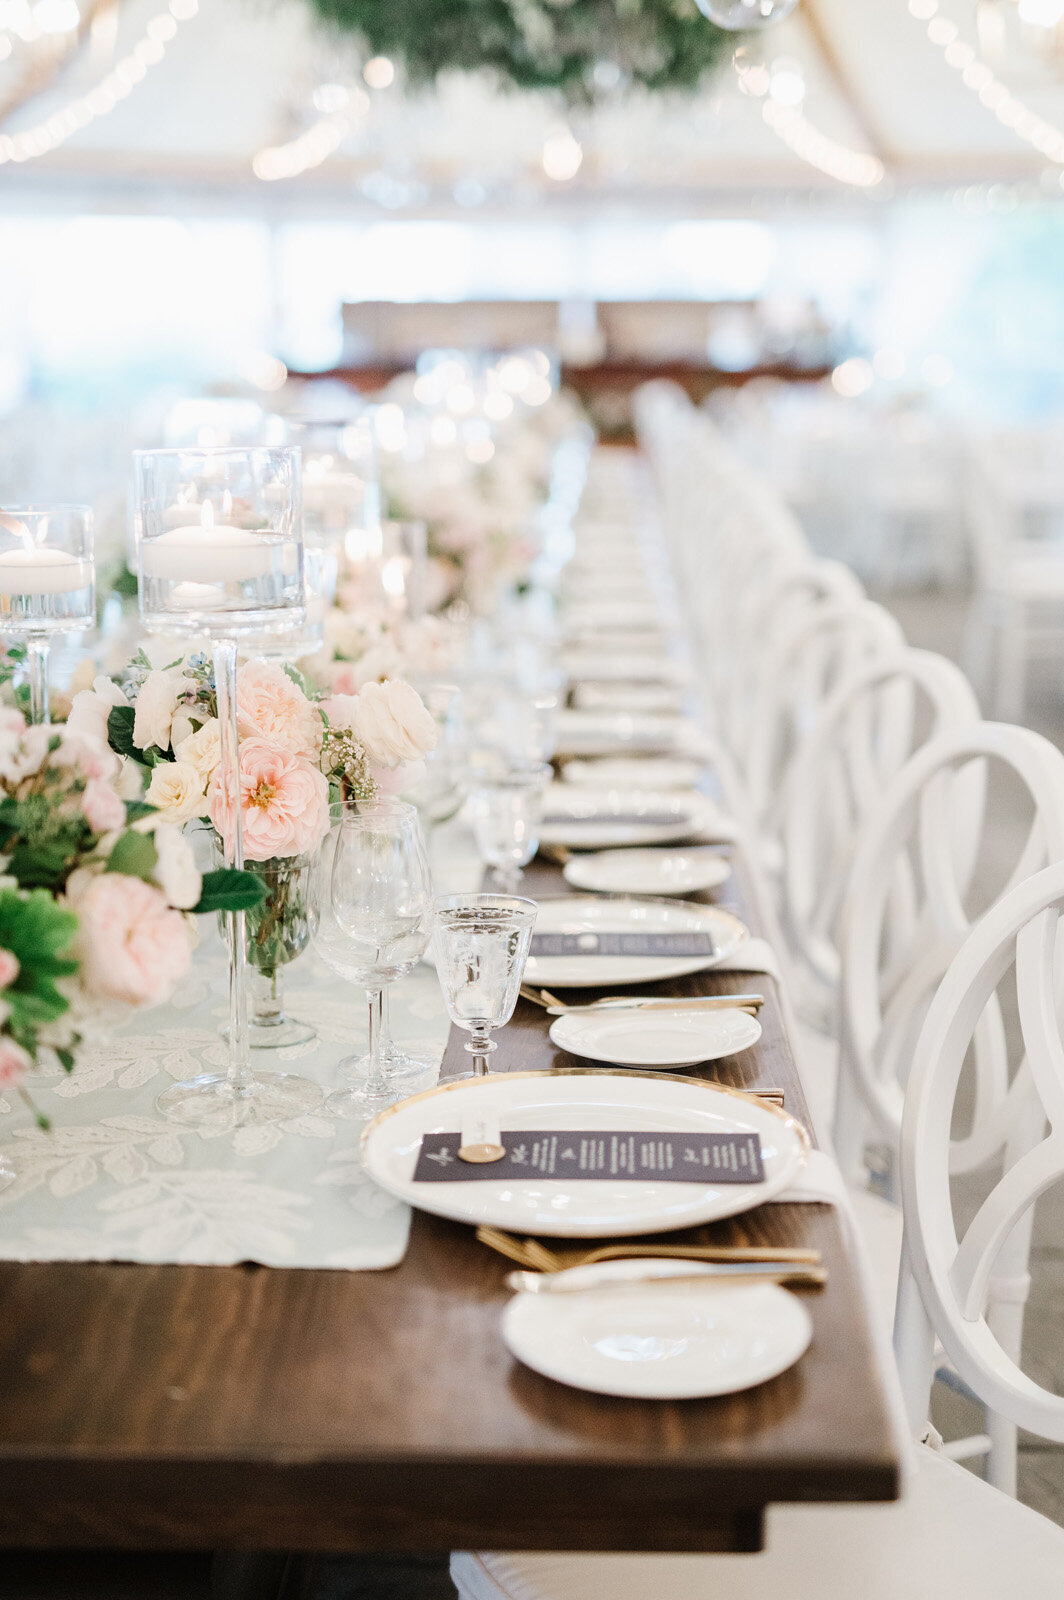 Kate-Murtaugh-Events-Newport-RI-Castle-Hill-Inn-dinner-head-table-bride-groom-wedding-planner